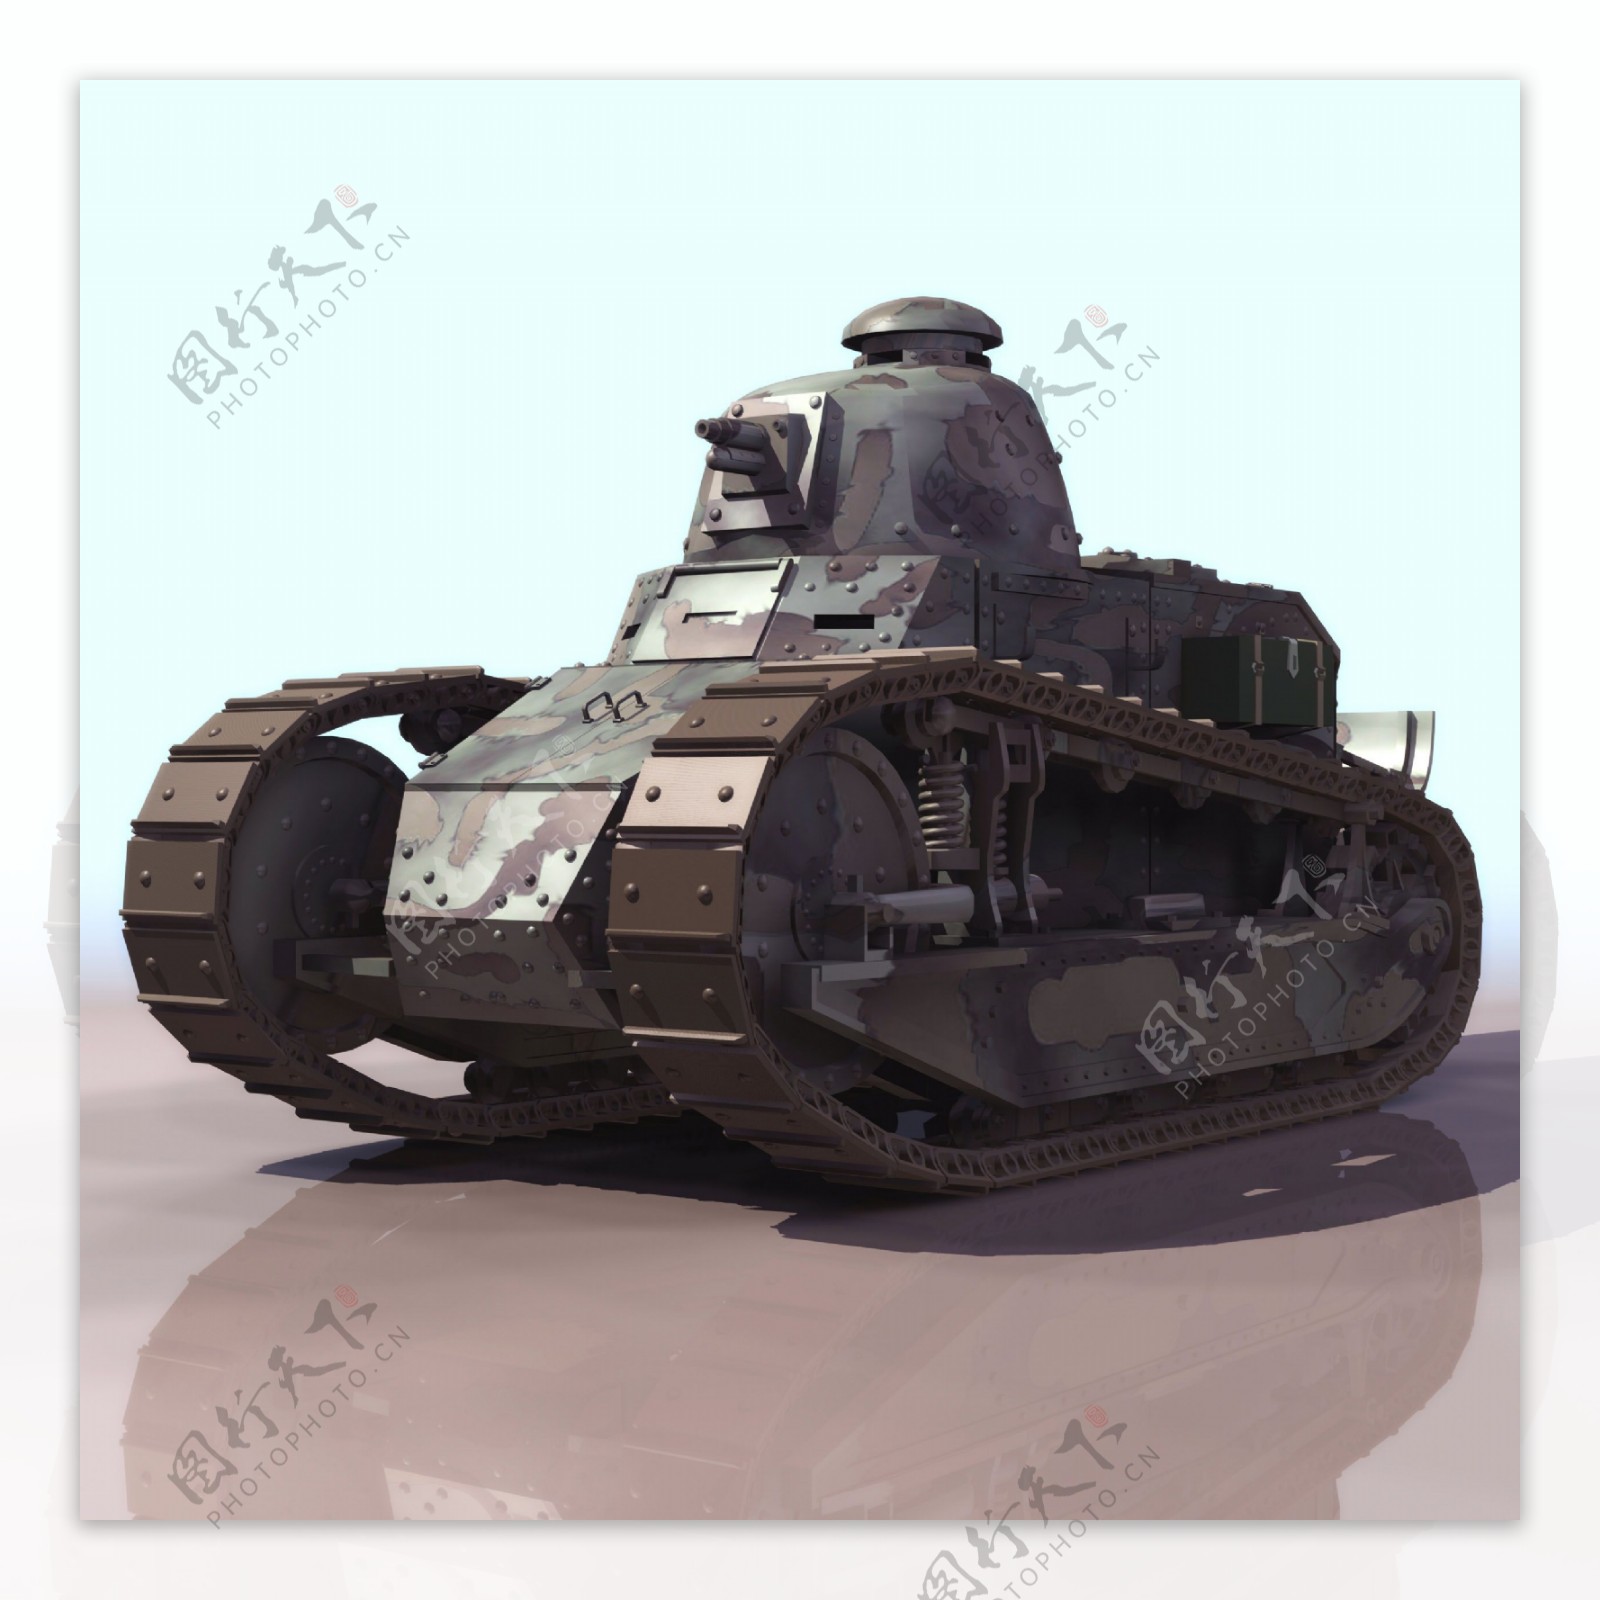 FT17BER坦克模型05